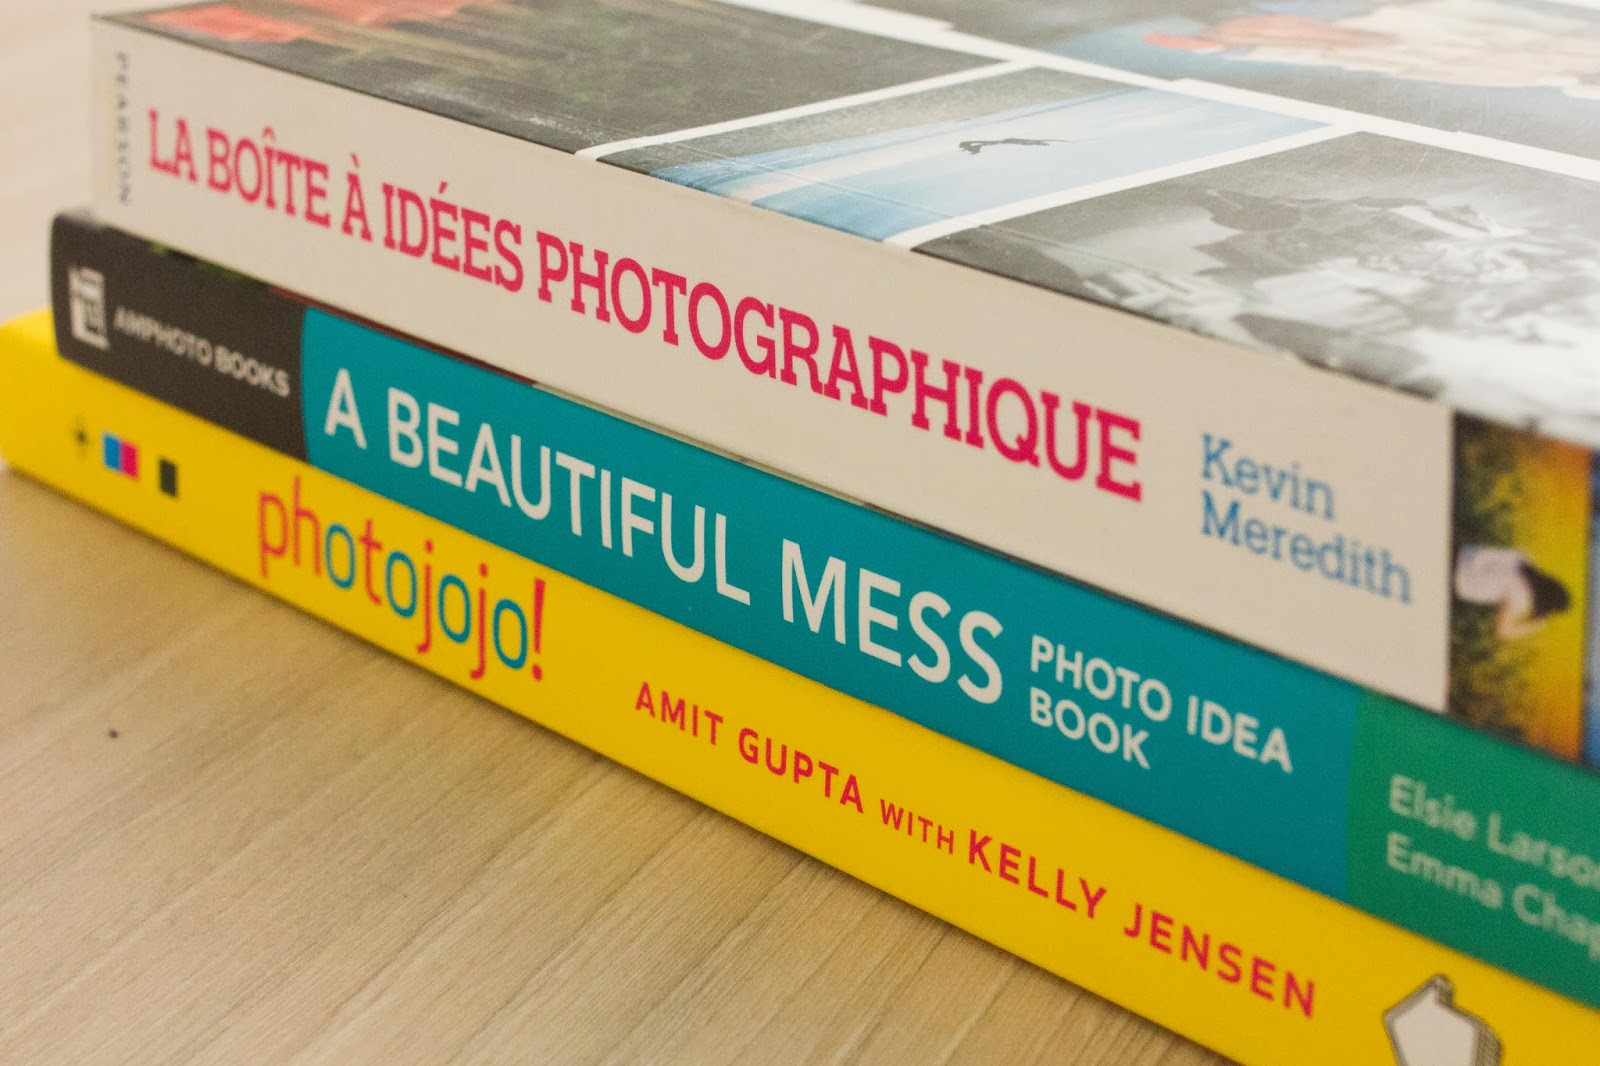 Libros de fotografia  livres photo